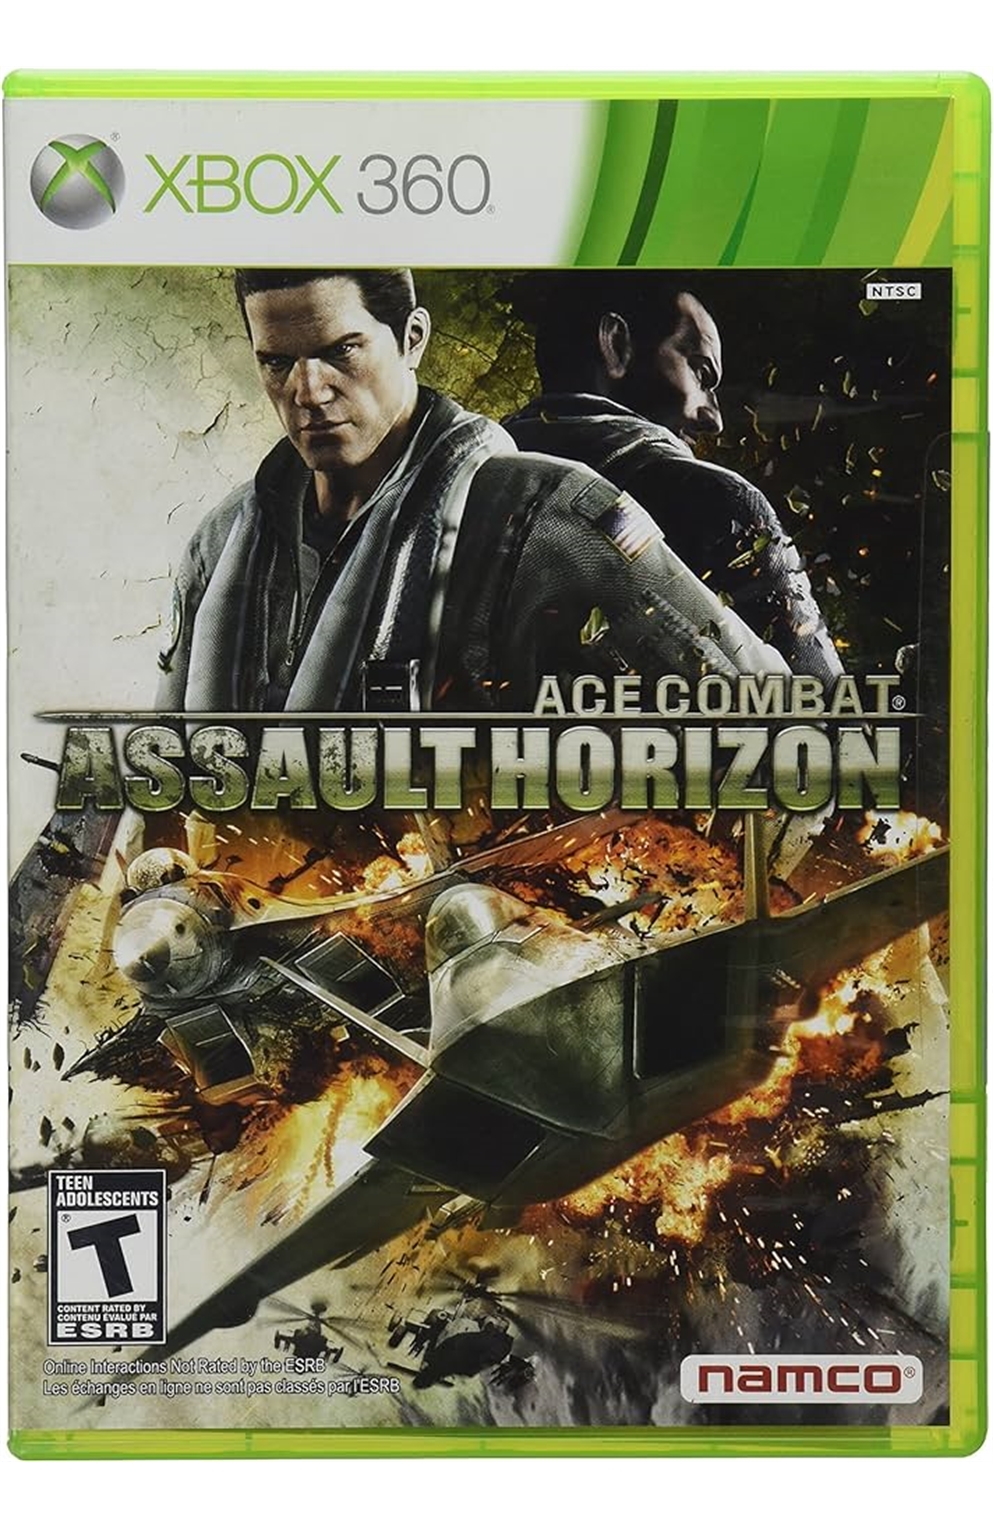 Xbox 360 Xb360 Ace Combat Assault Horizon